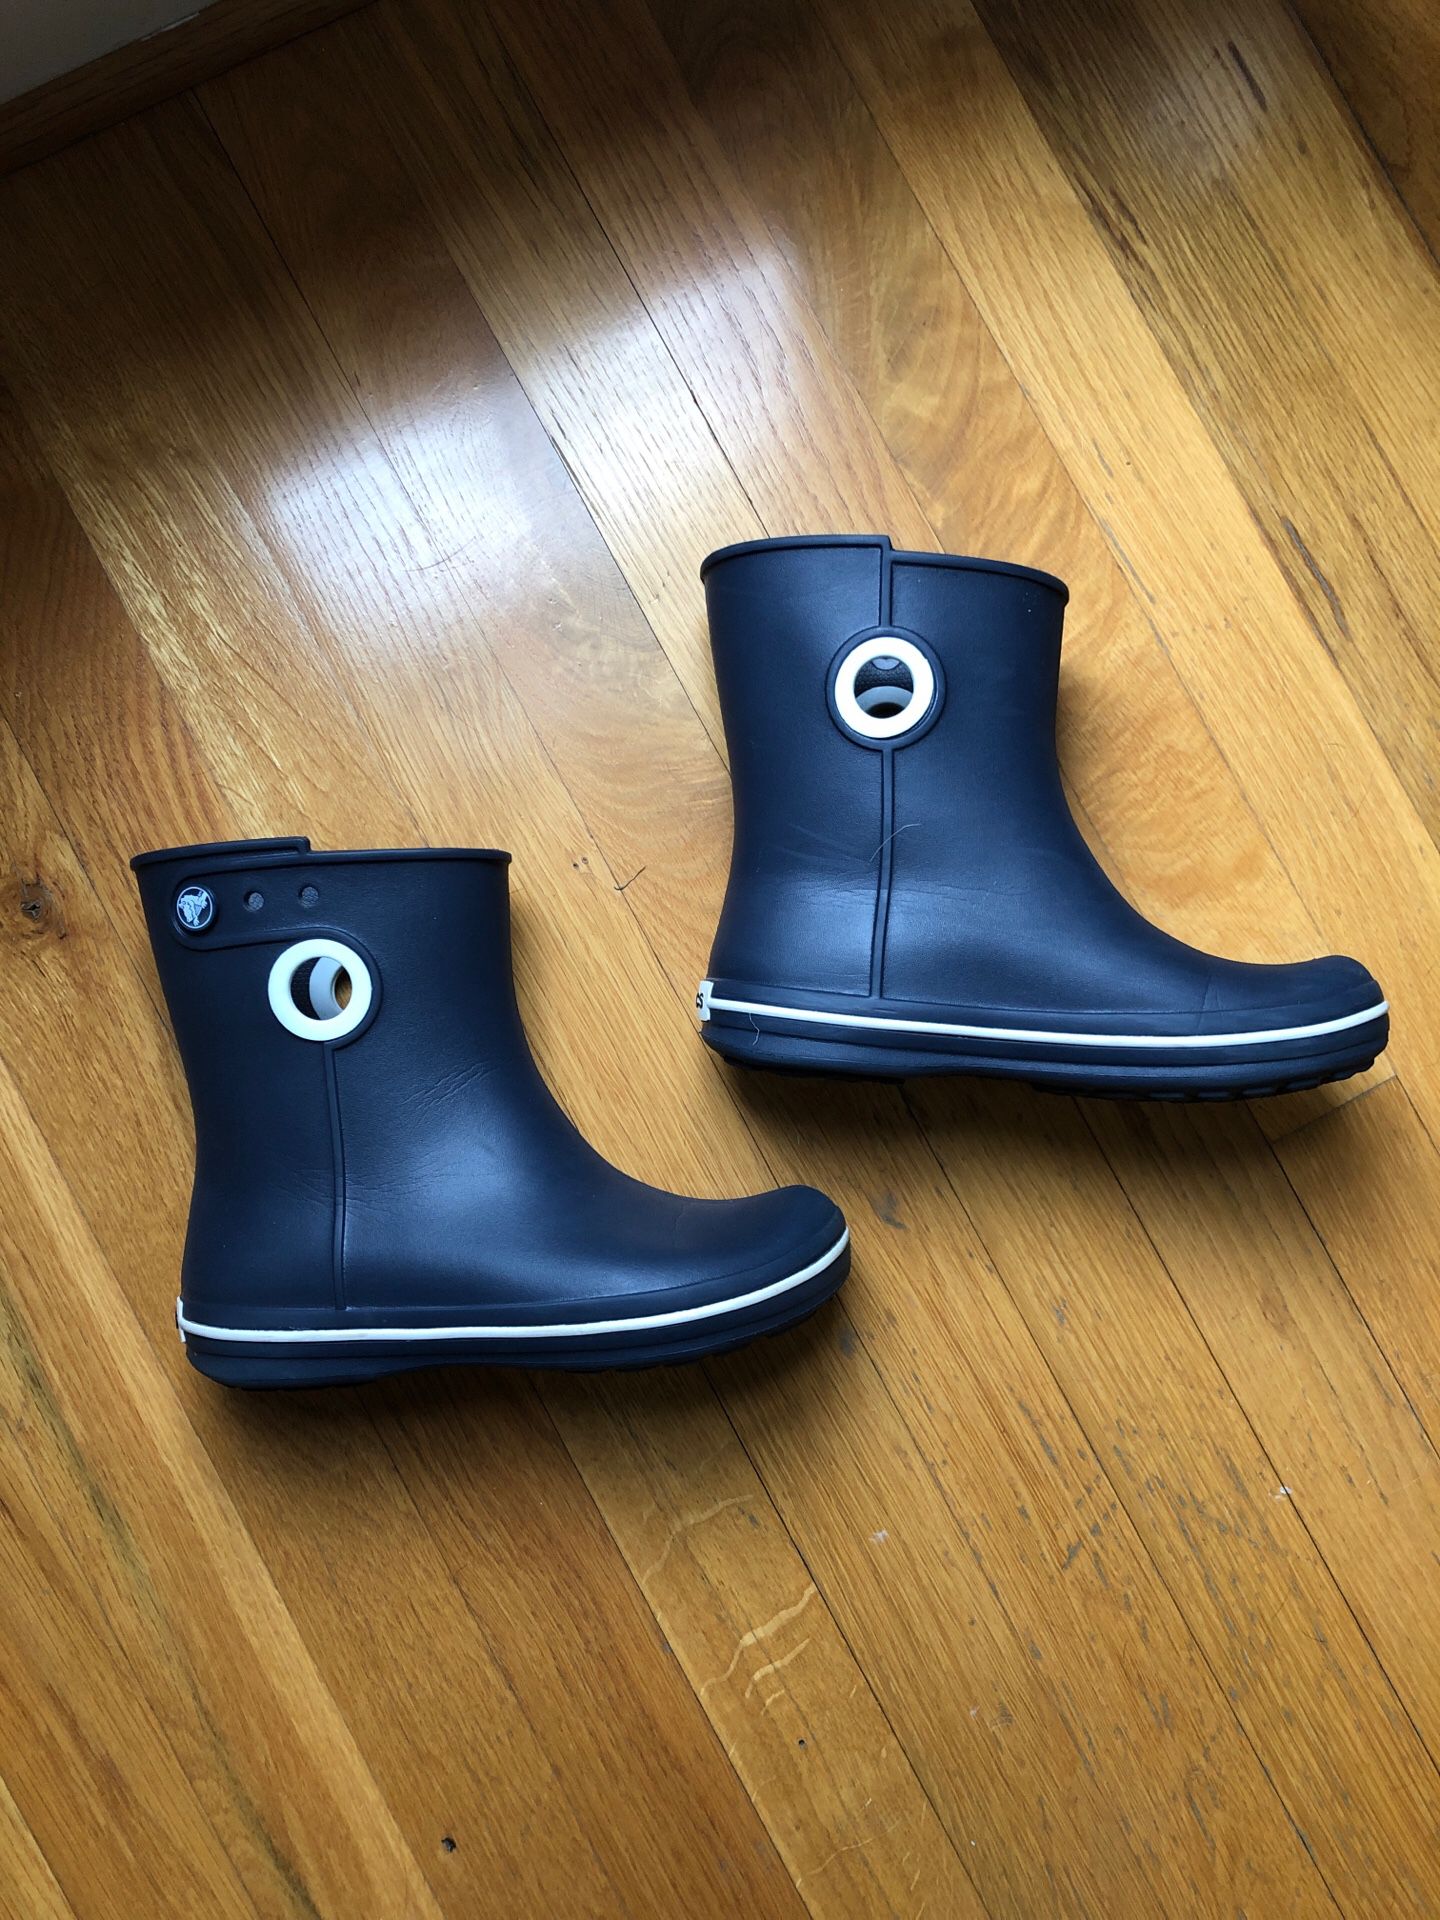 New! Croc’s women’s rain boots - size 4